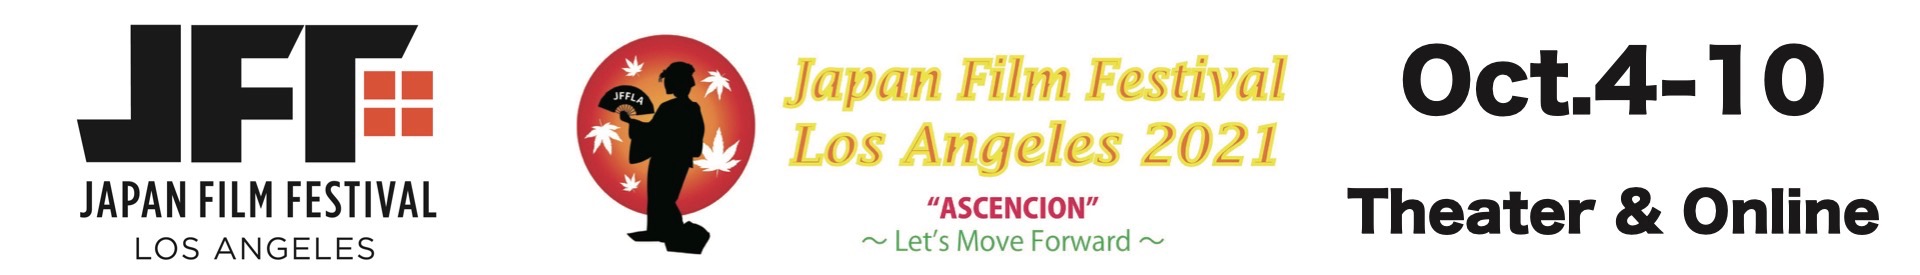 Japan Film Festival Los Angeles 2021